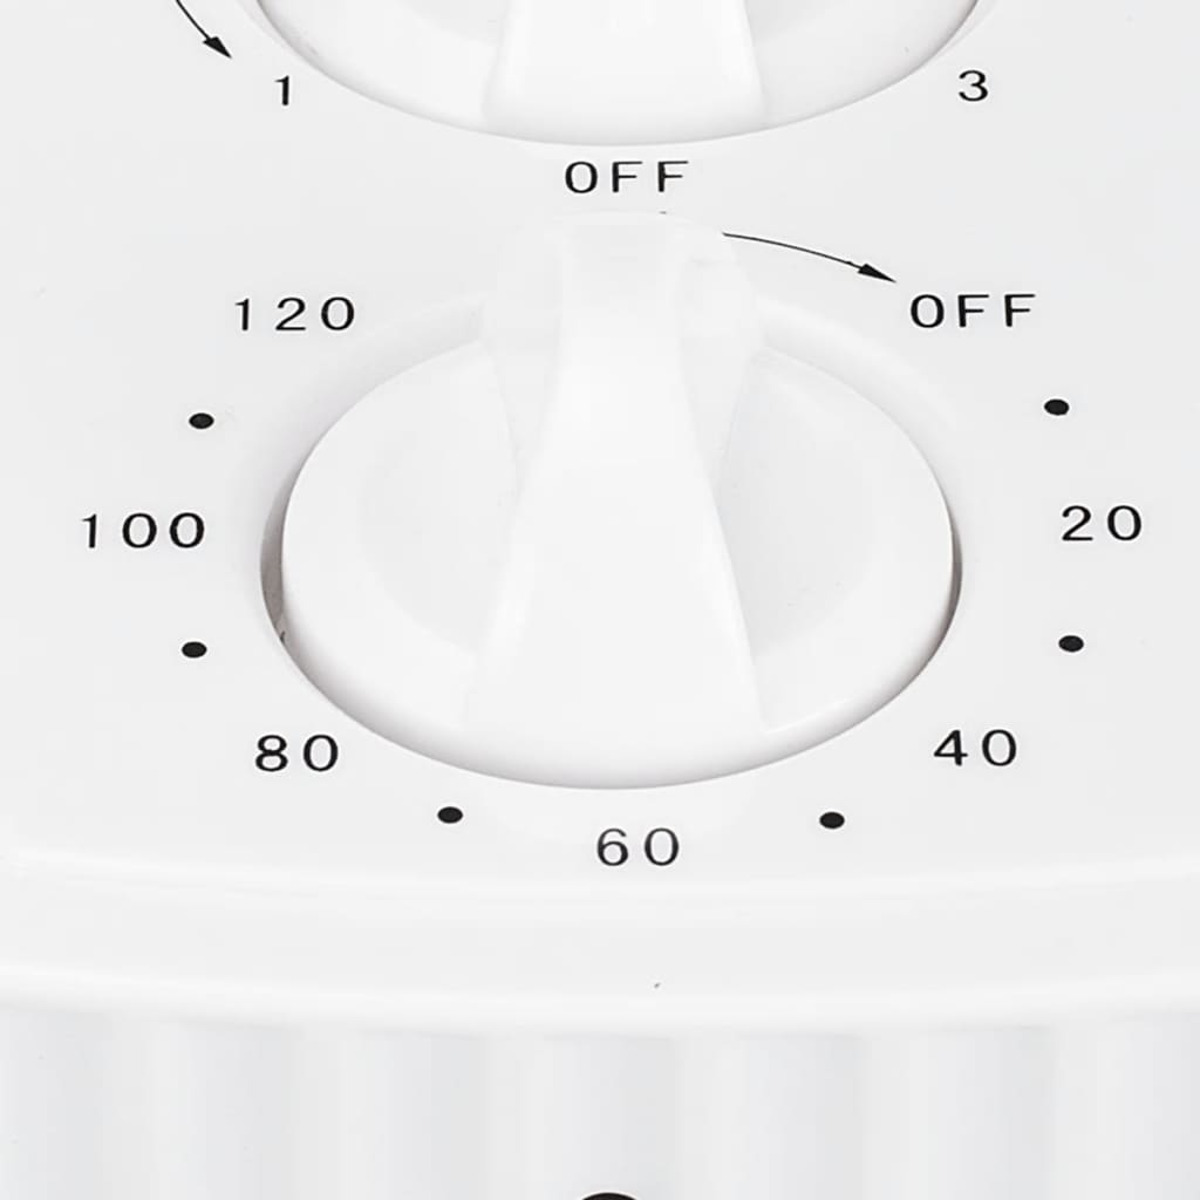 TRISTAR 410549 Ventilator (35 Watt) Weiß